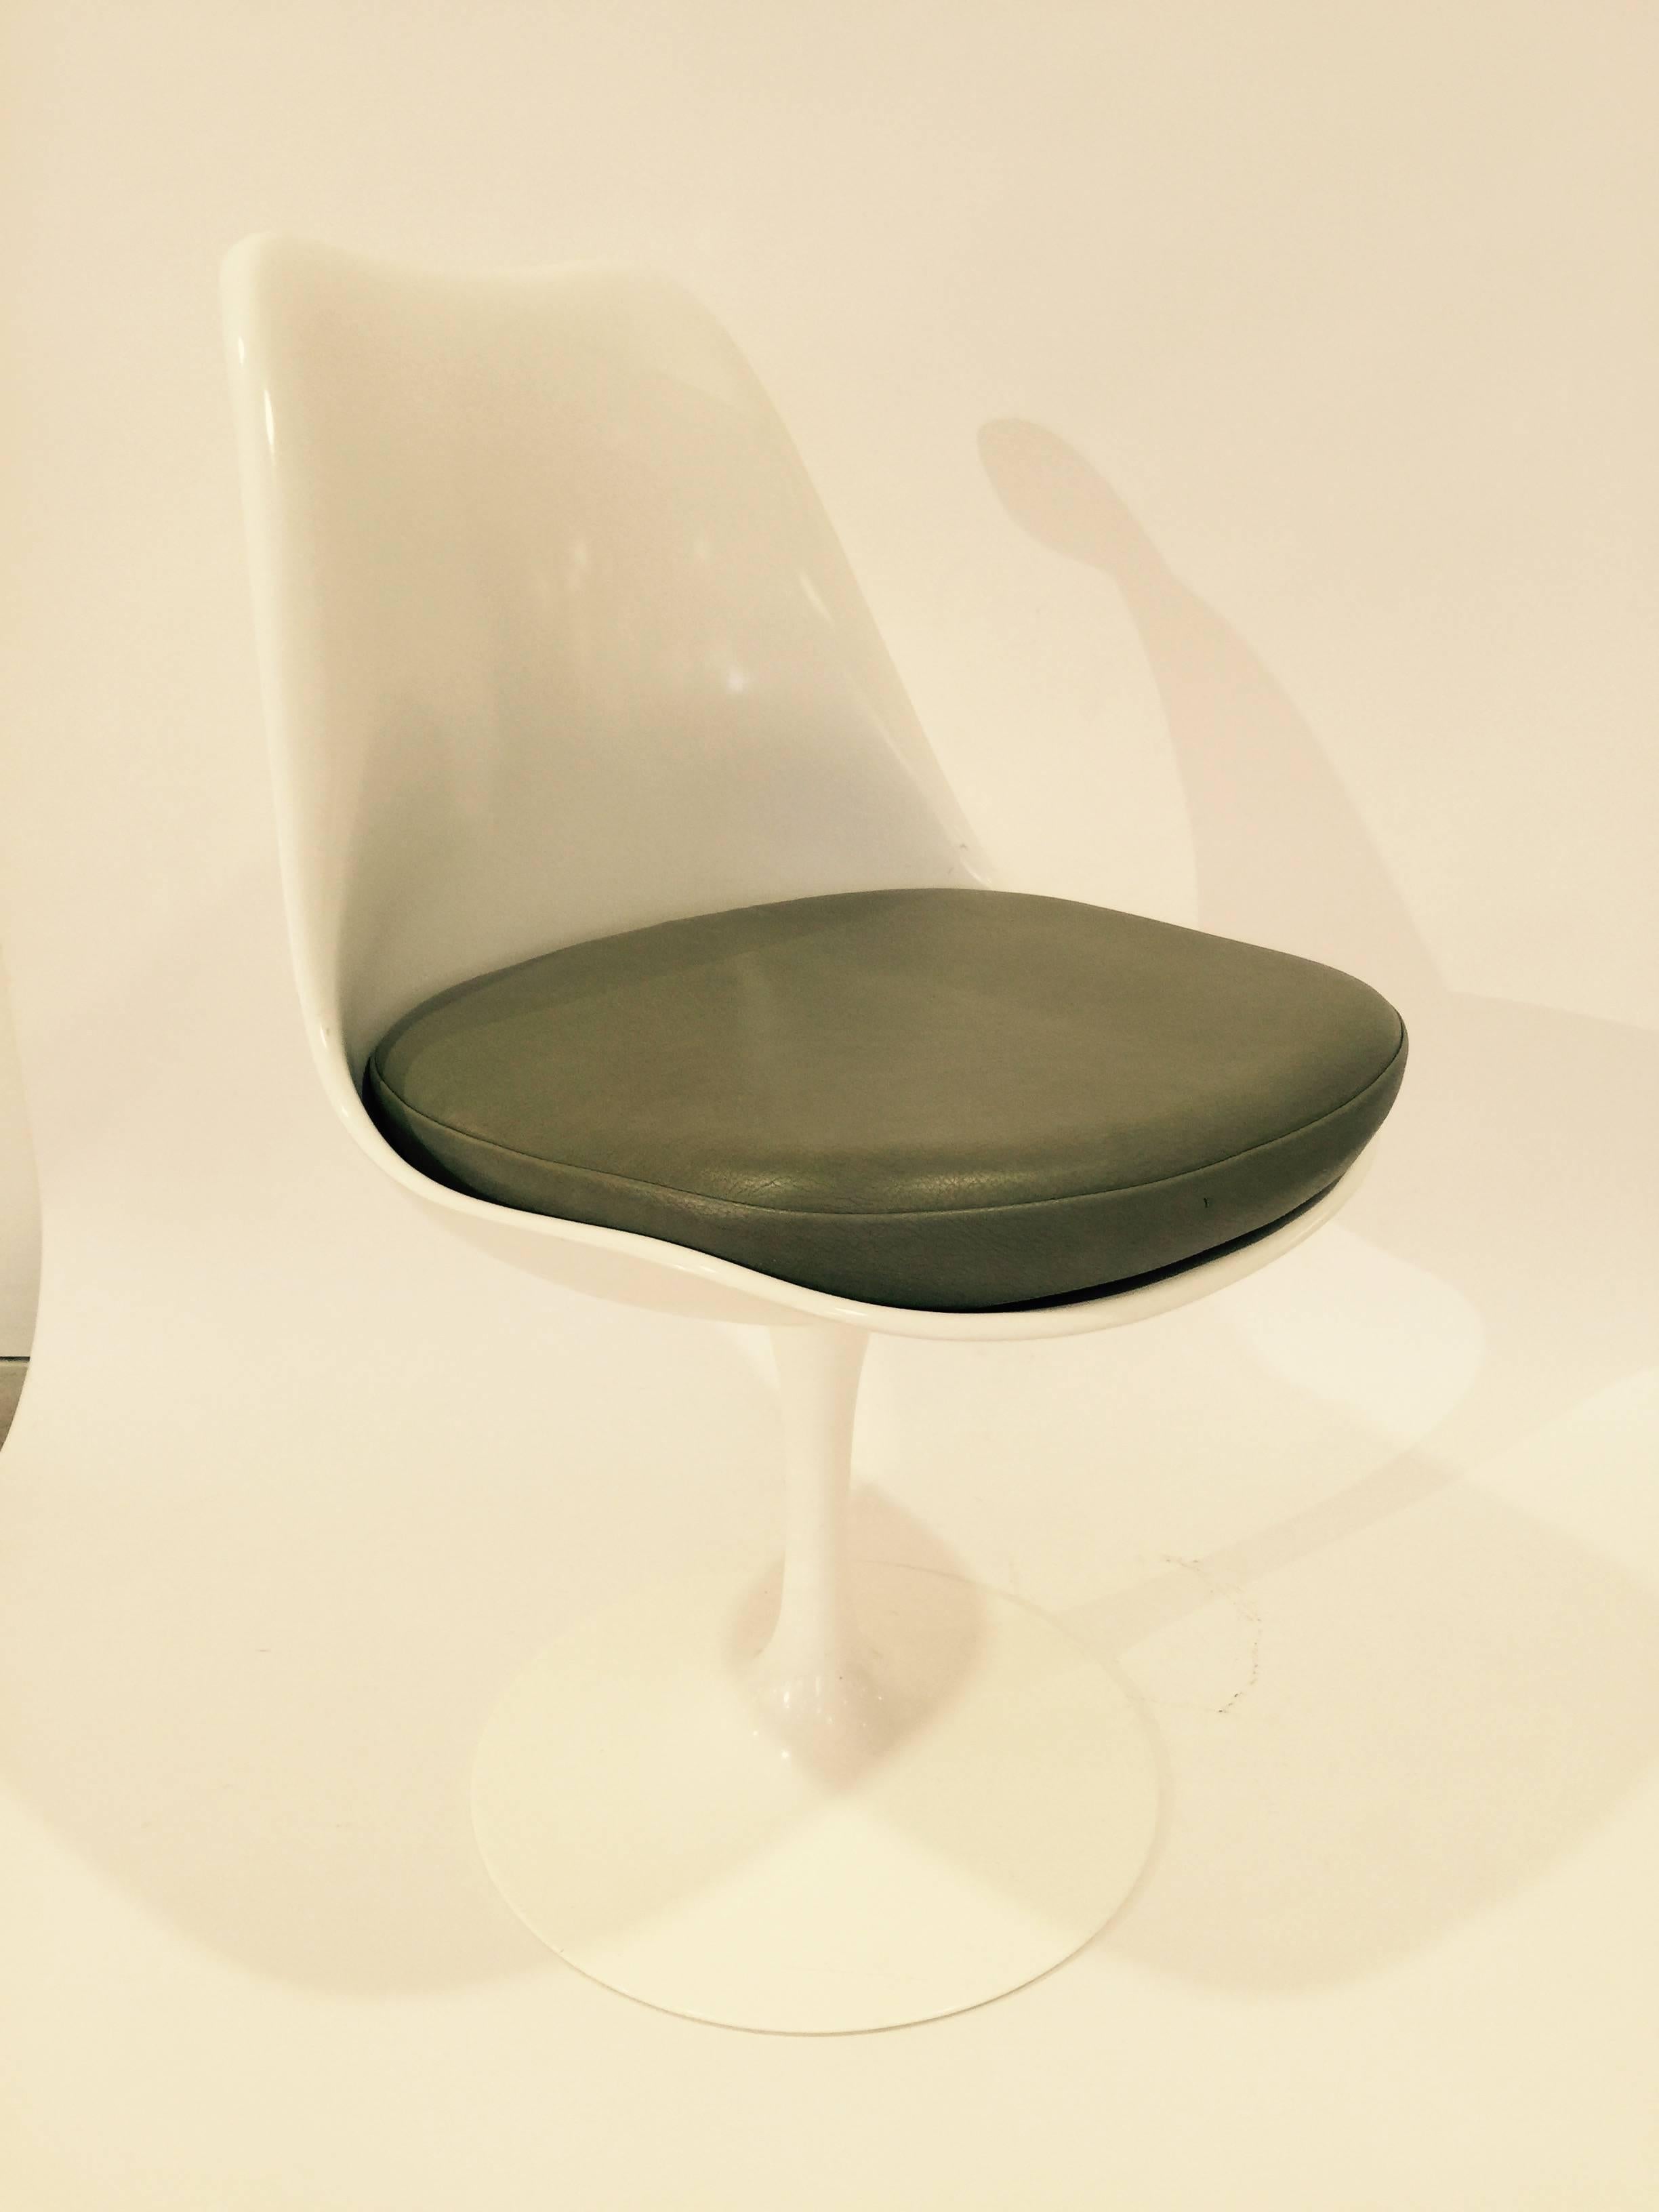 American Knoll Studio Saarinen White Tulip Dining Chairs